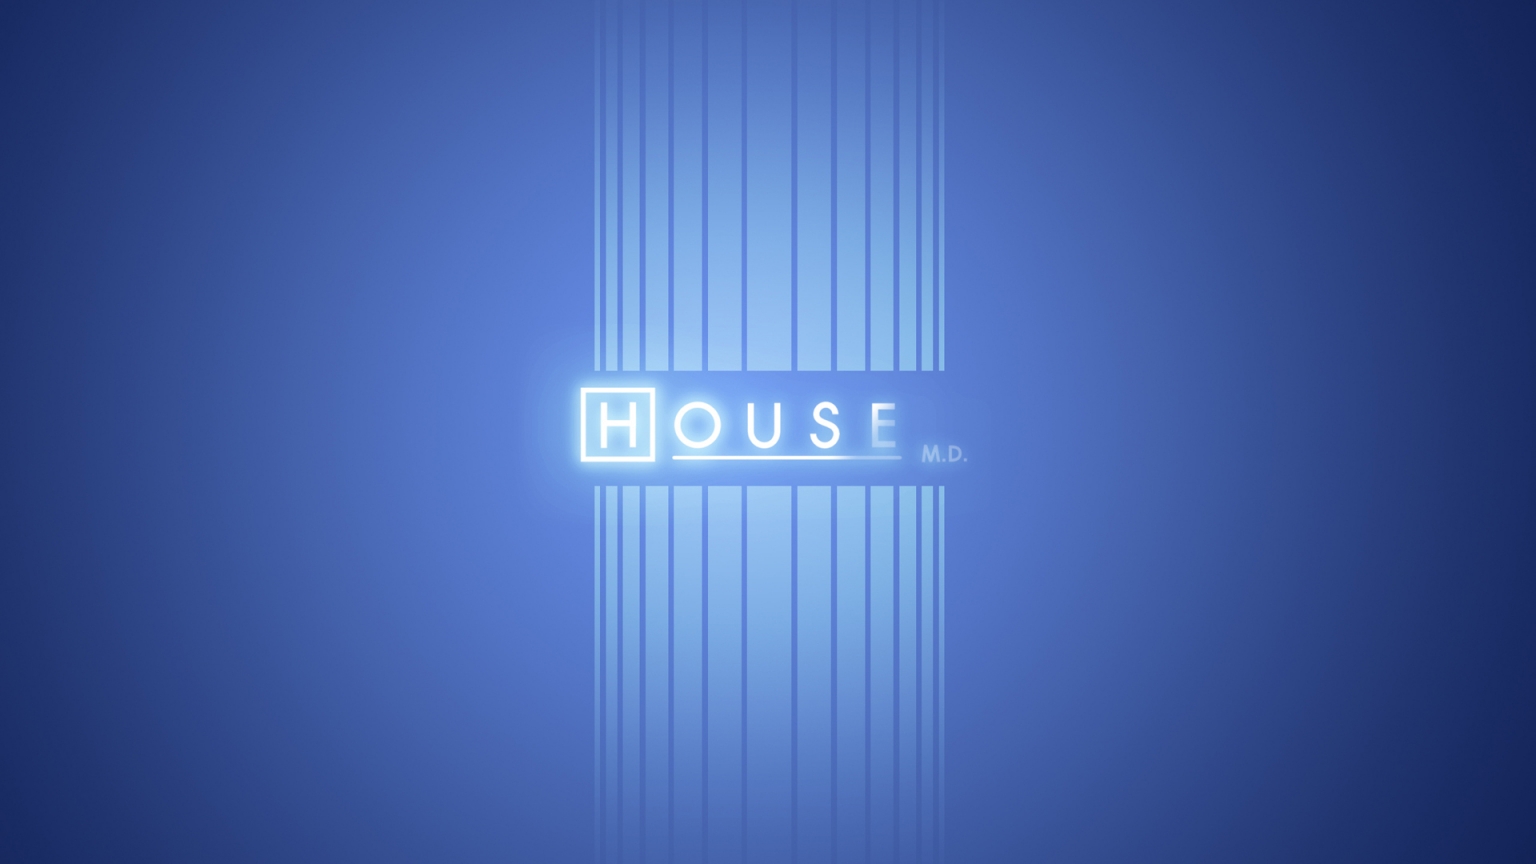 House MD Logo for 1536 x 864 HDTV resolution